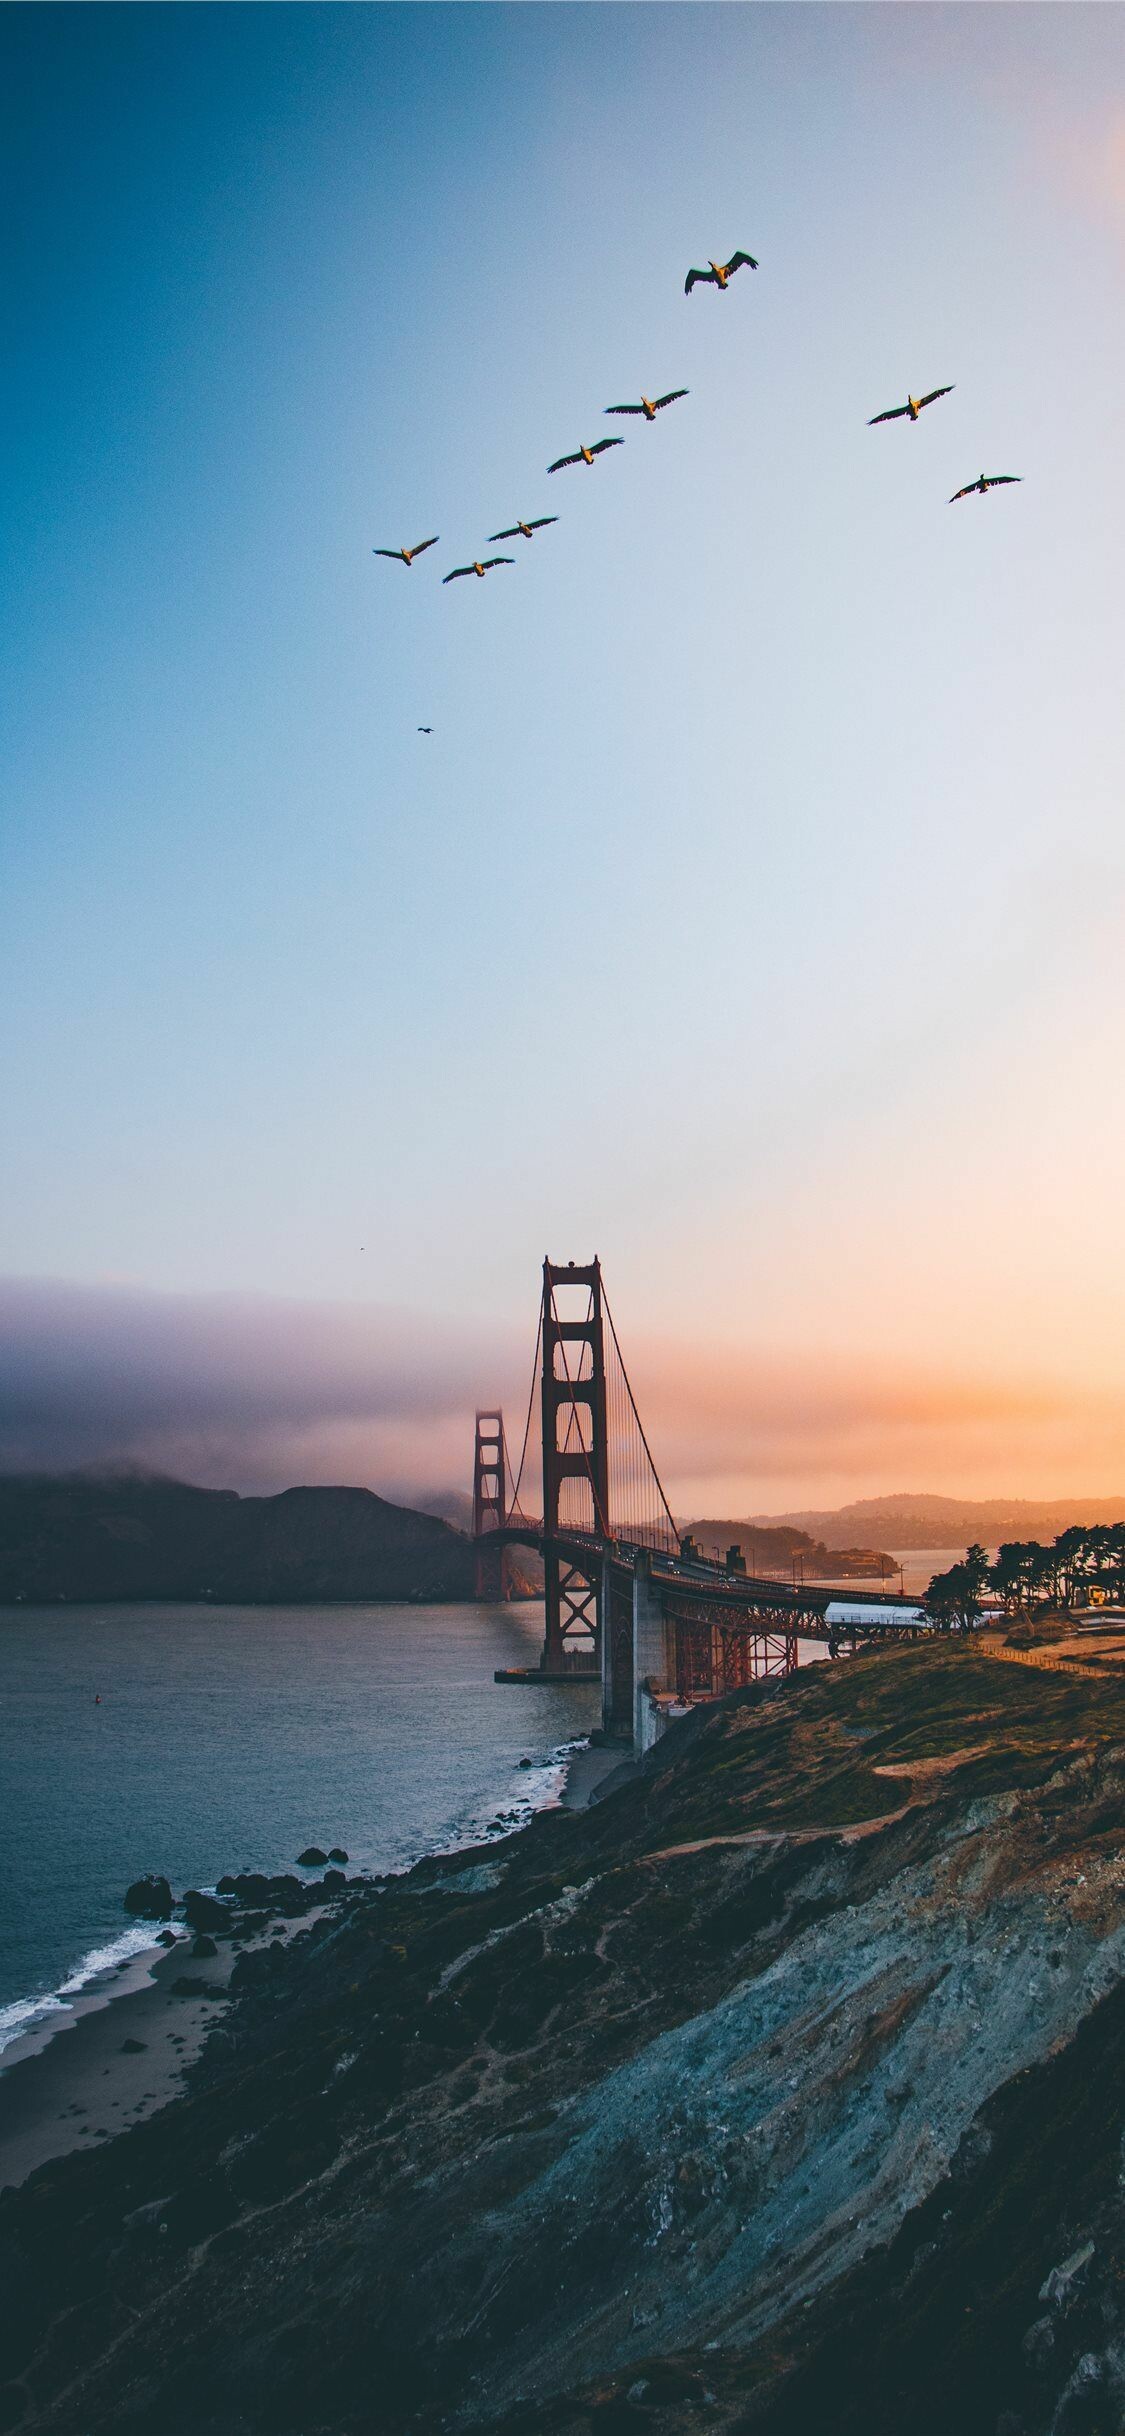 United States: A suspension bridge spanning the Golden Gate, San Francisco, California. 1130x2440 HD Wallpaper.